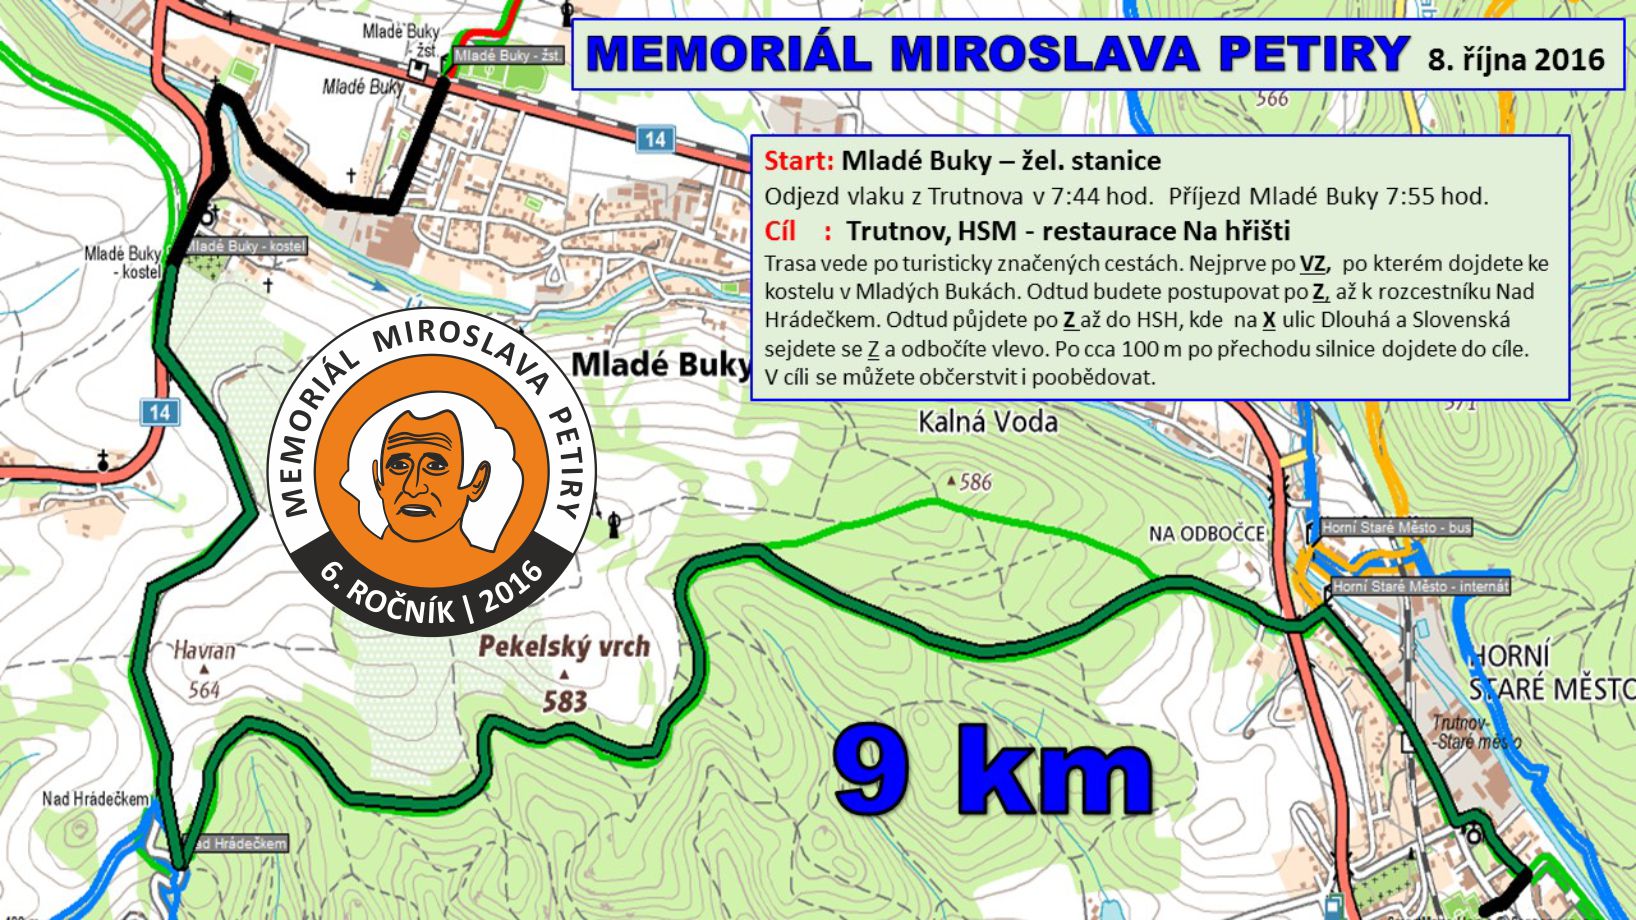 Memoriál Miroslava Petiry - Itinerář 2016, 9 km